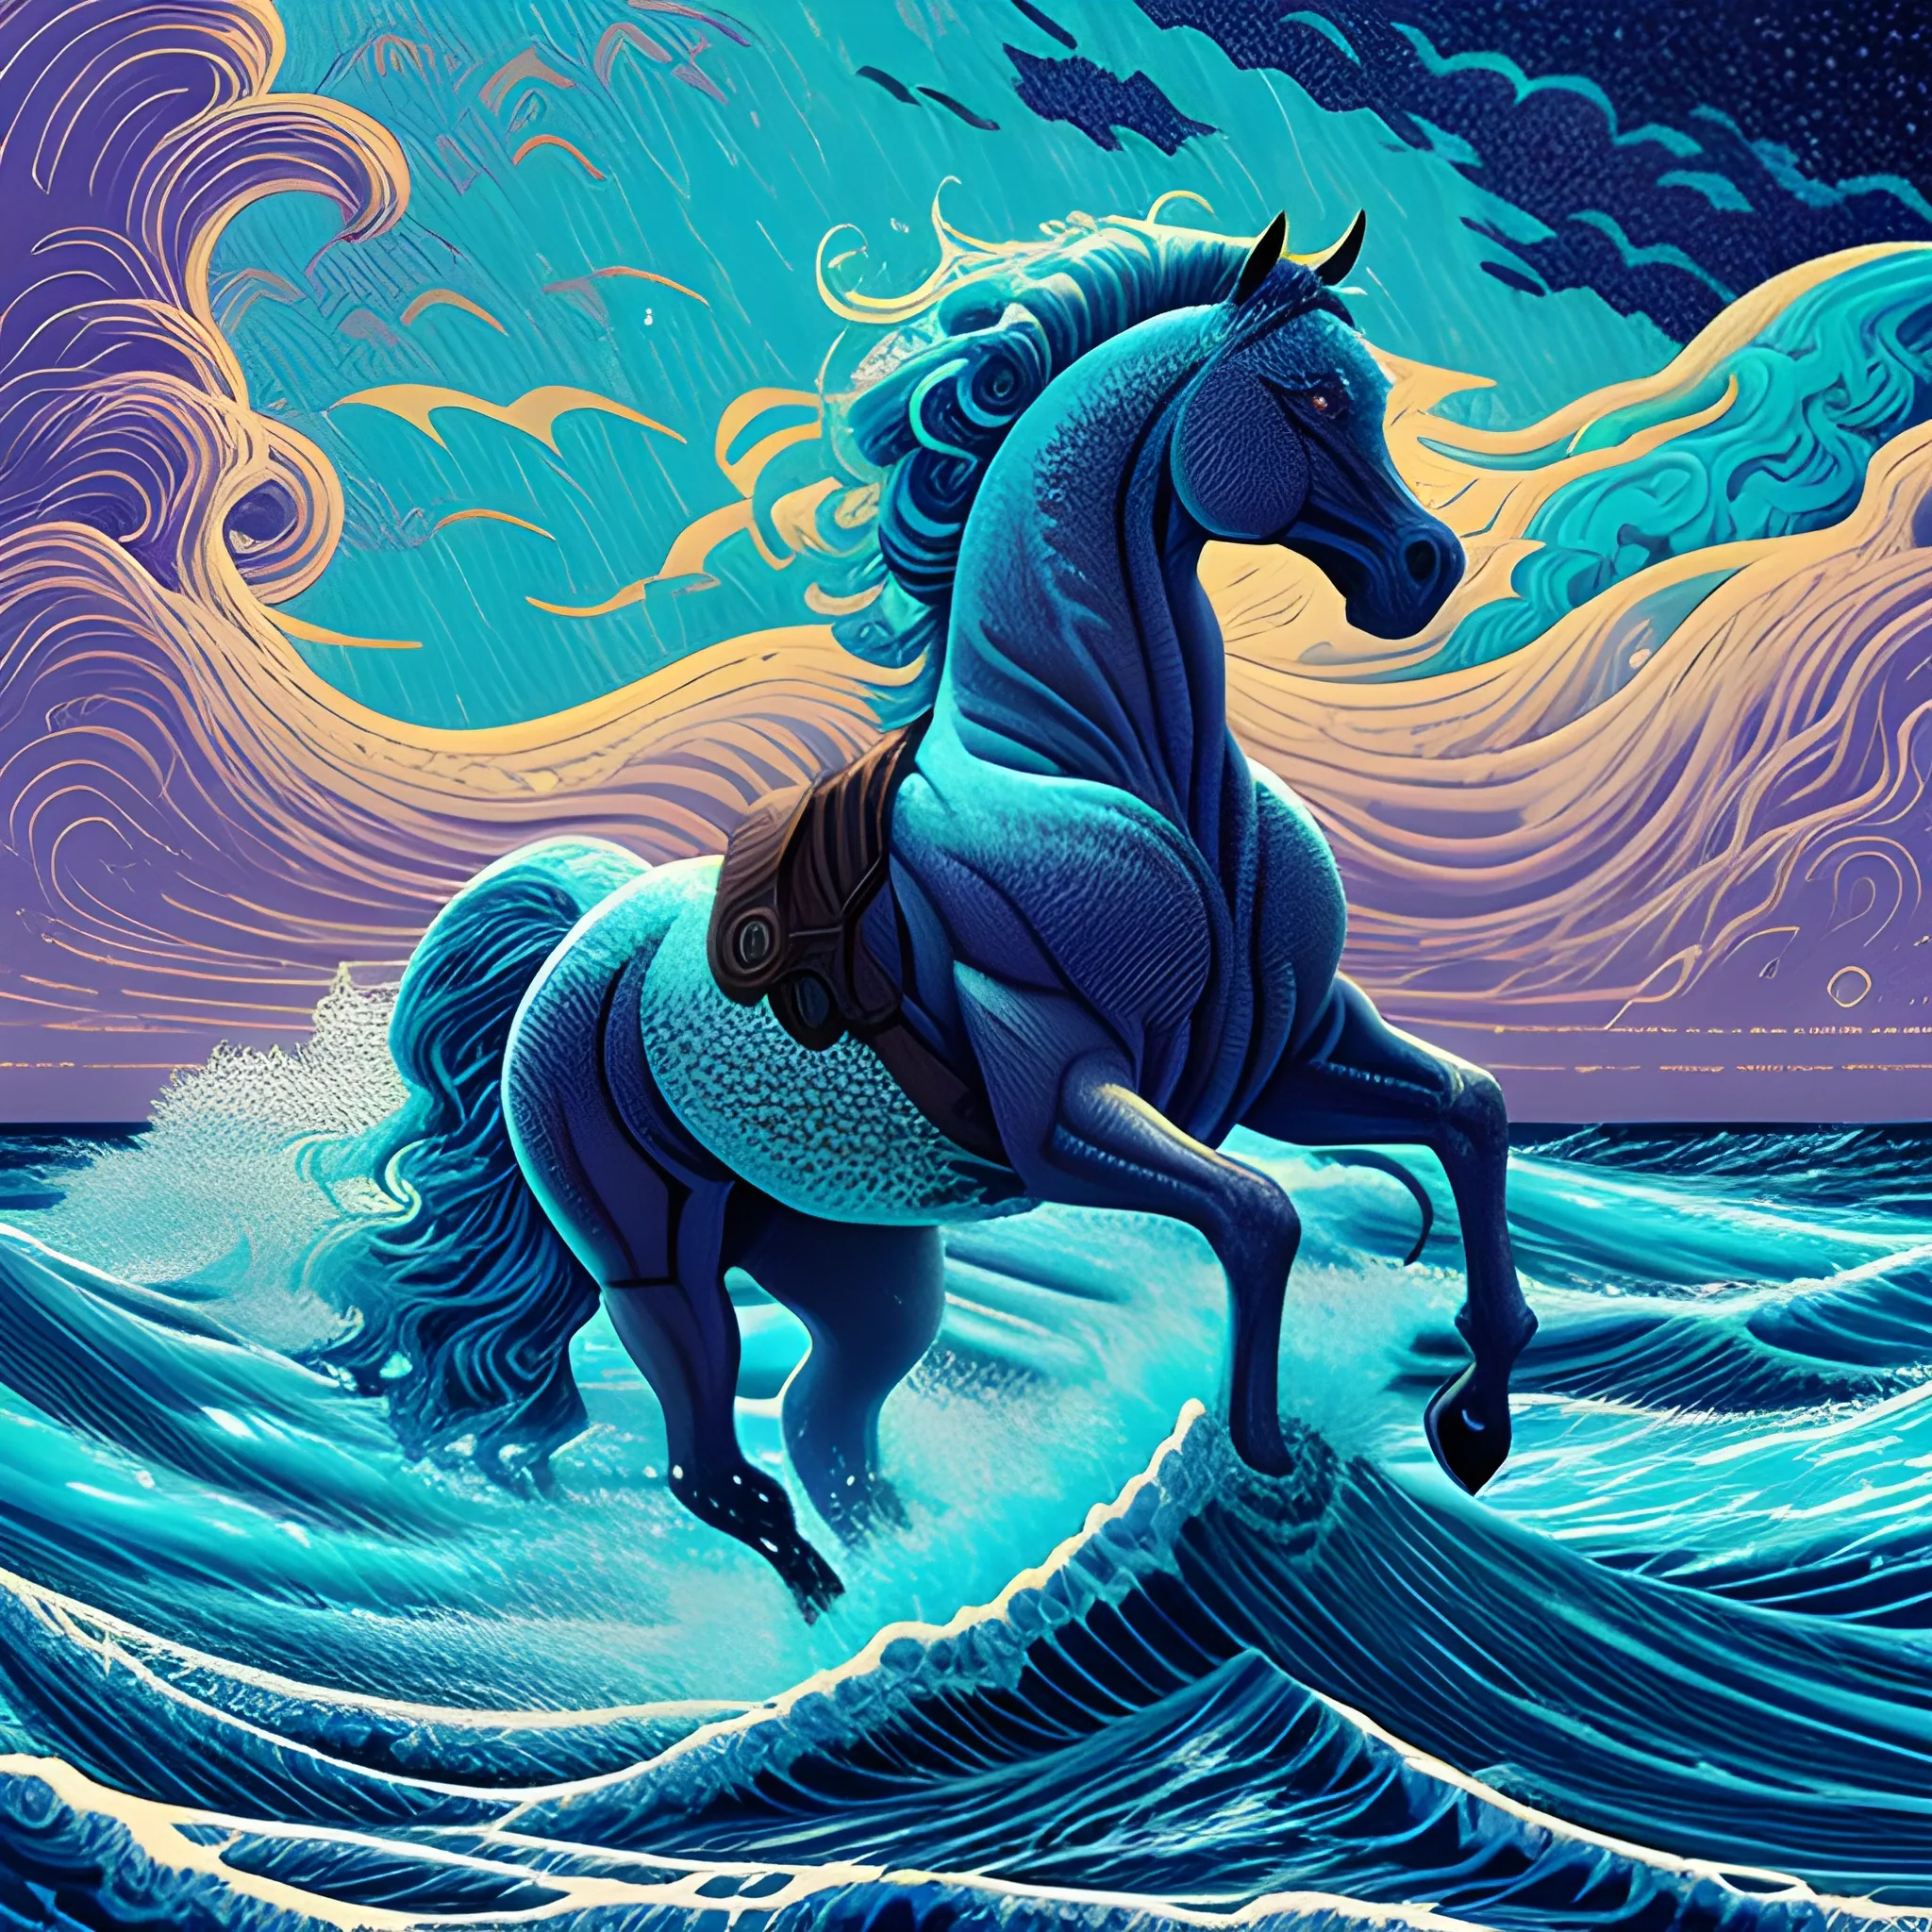 seafoam horses leap from ocean waves, imposing, ominous ocean wa ...